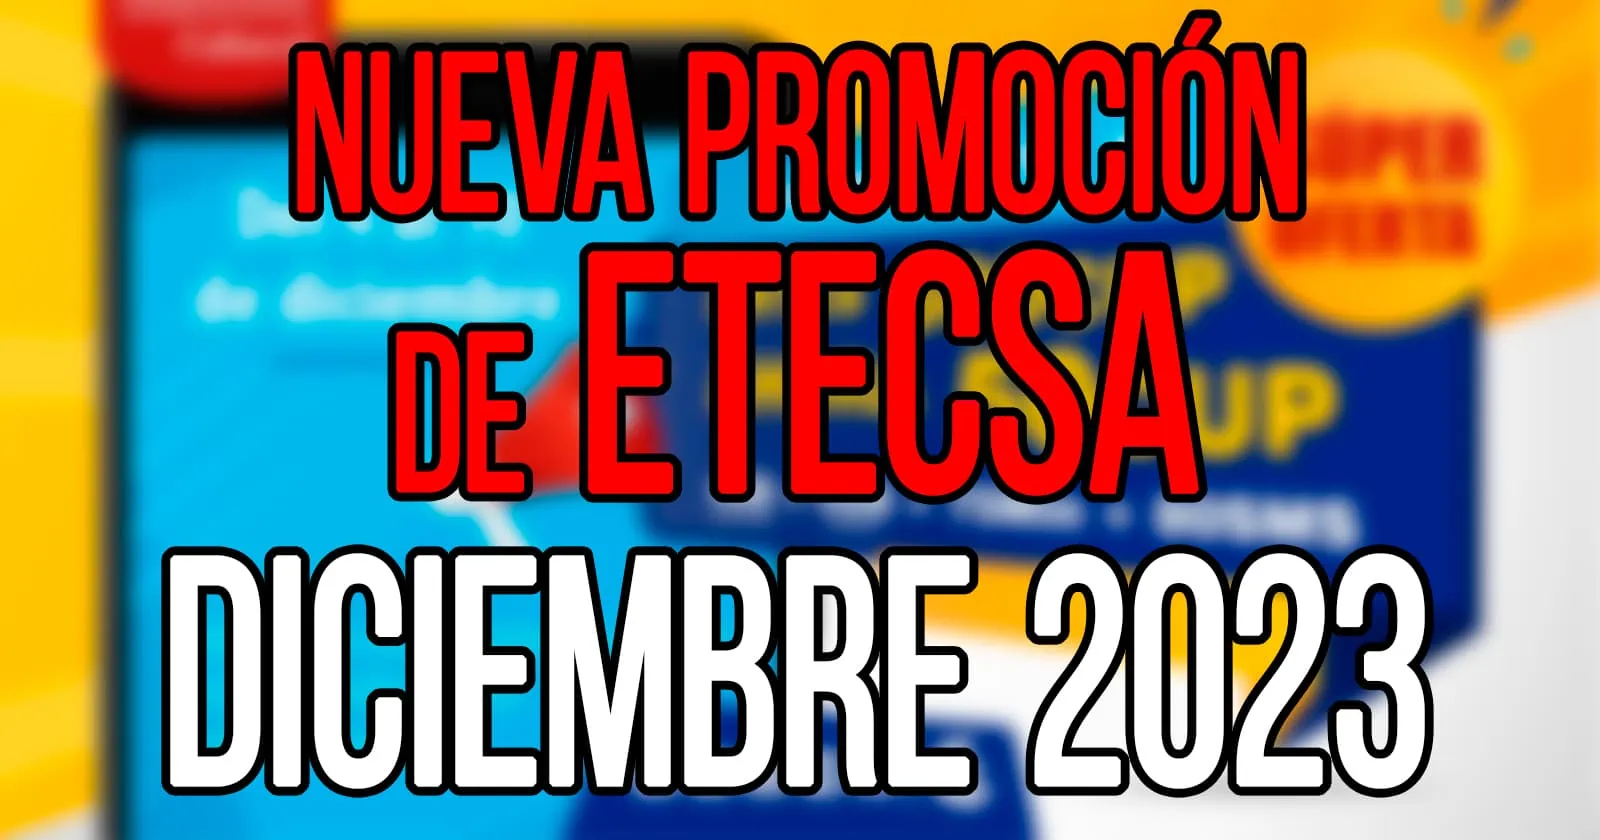 ETECSA Anuncia Promoción de Recarga Internacional de Diciembre de 2023 Celebrando el Fin de Año